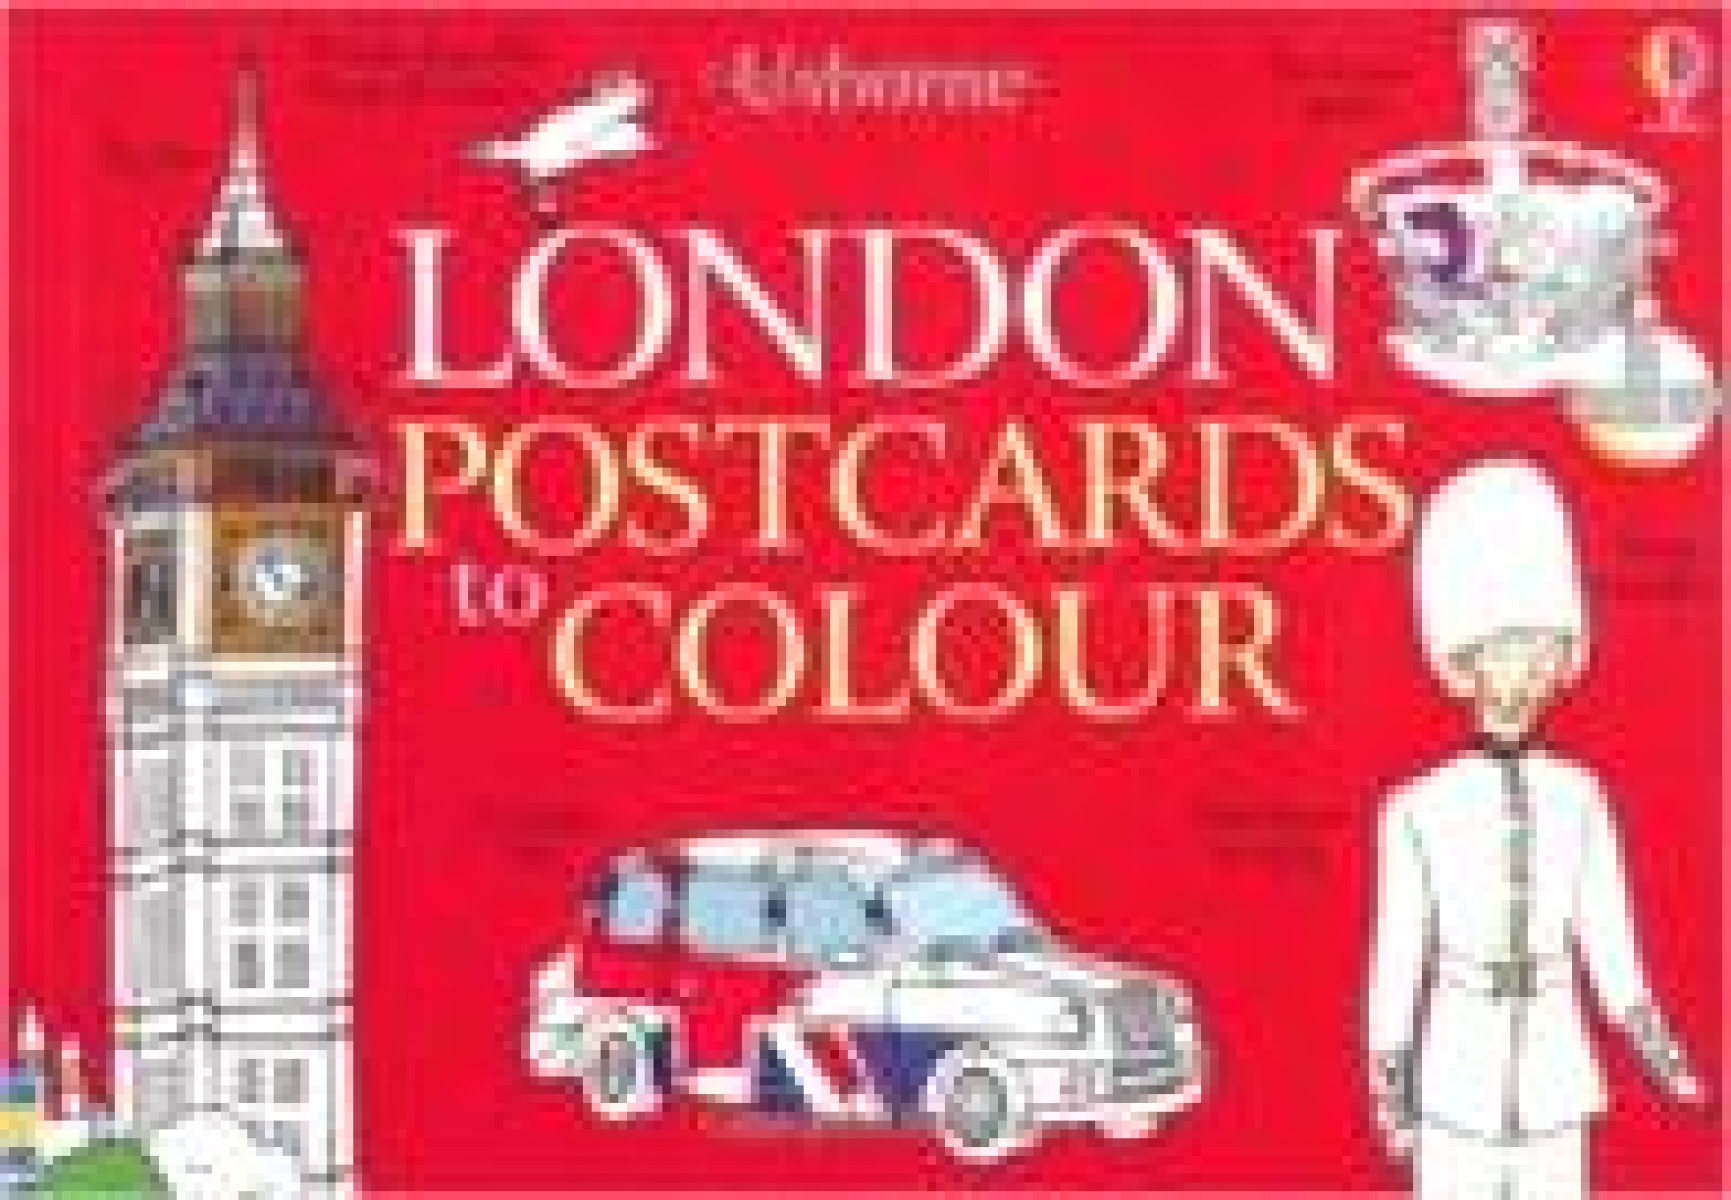 London Postcards to Colour 